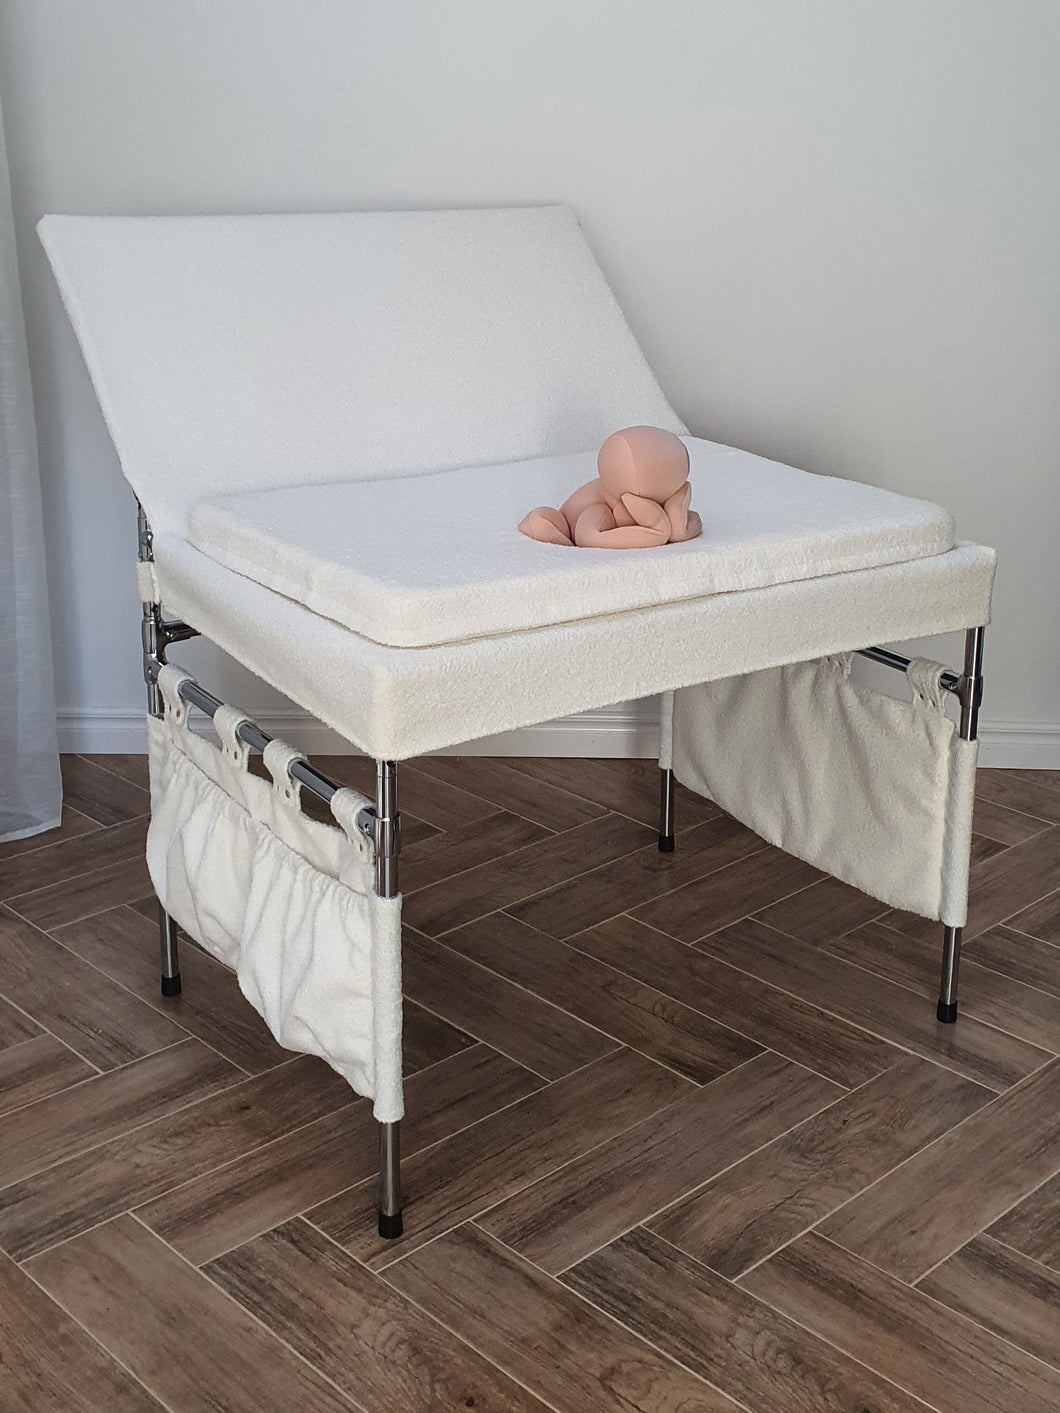 Baby Fox Foldable Newborn Posing Table set with a Mattress - Teddy